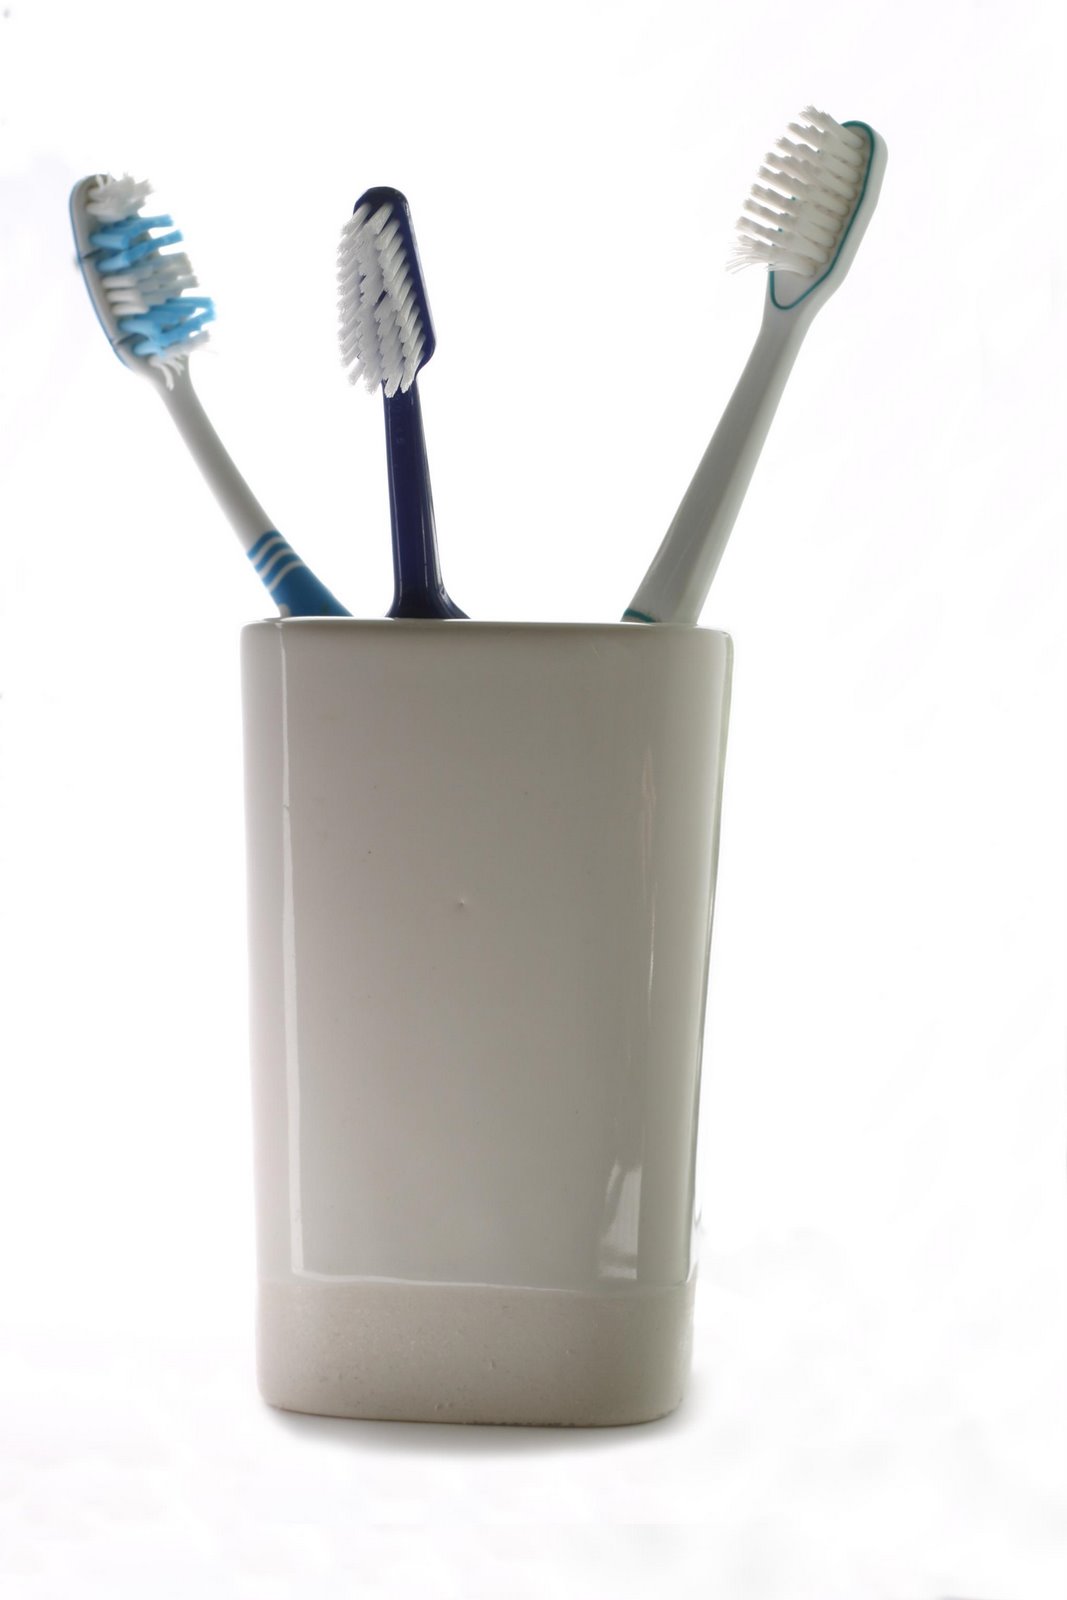 [Toothbrush-20060209.JPG]